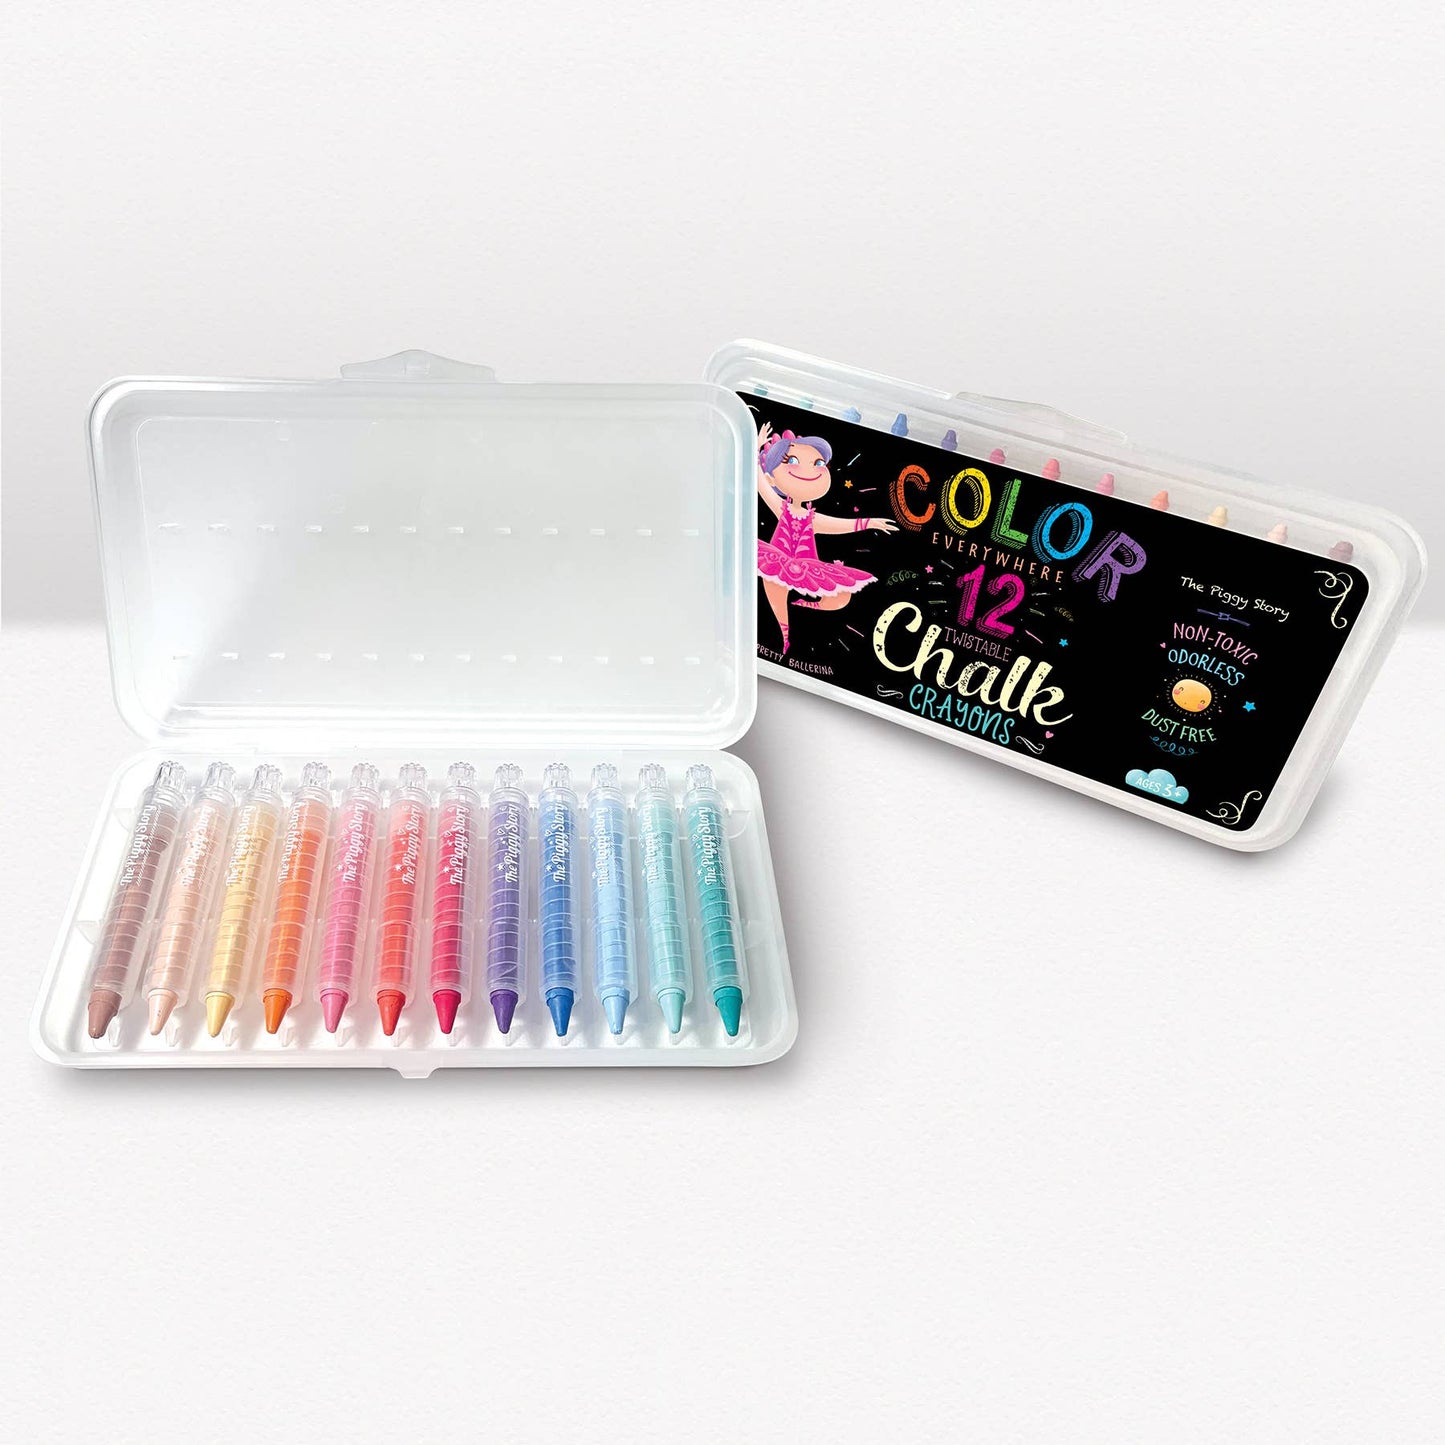 Color Everywhere Twistable Chalk Crayons | Pretty Ballerinas